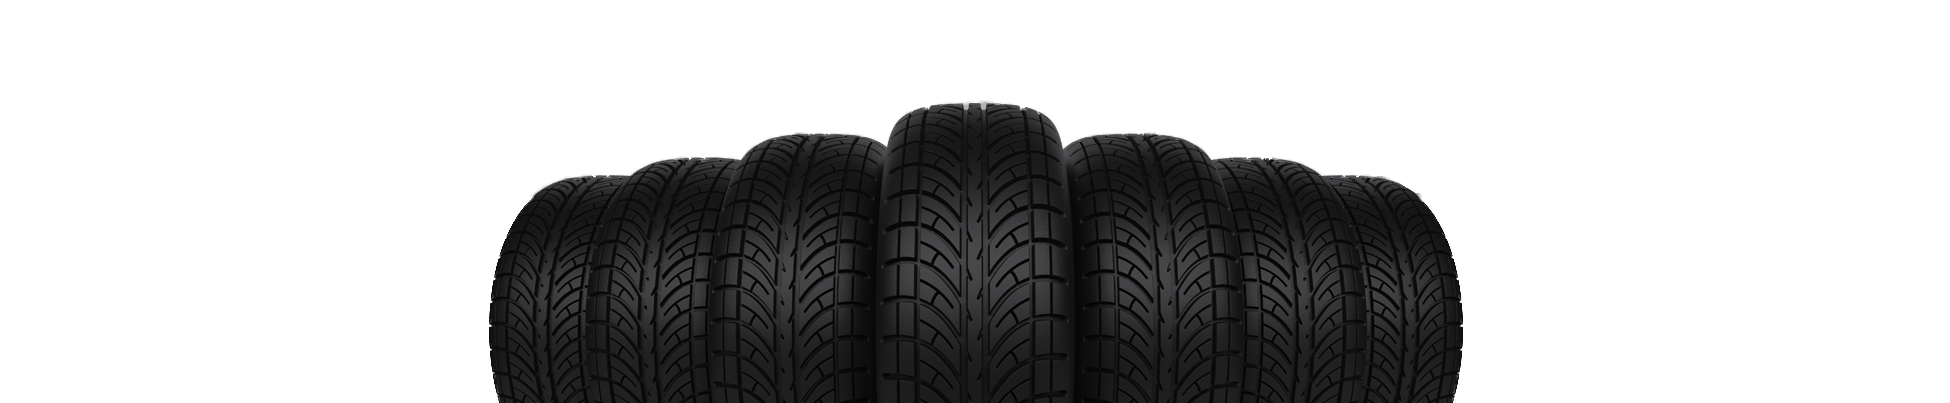 Tire Image